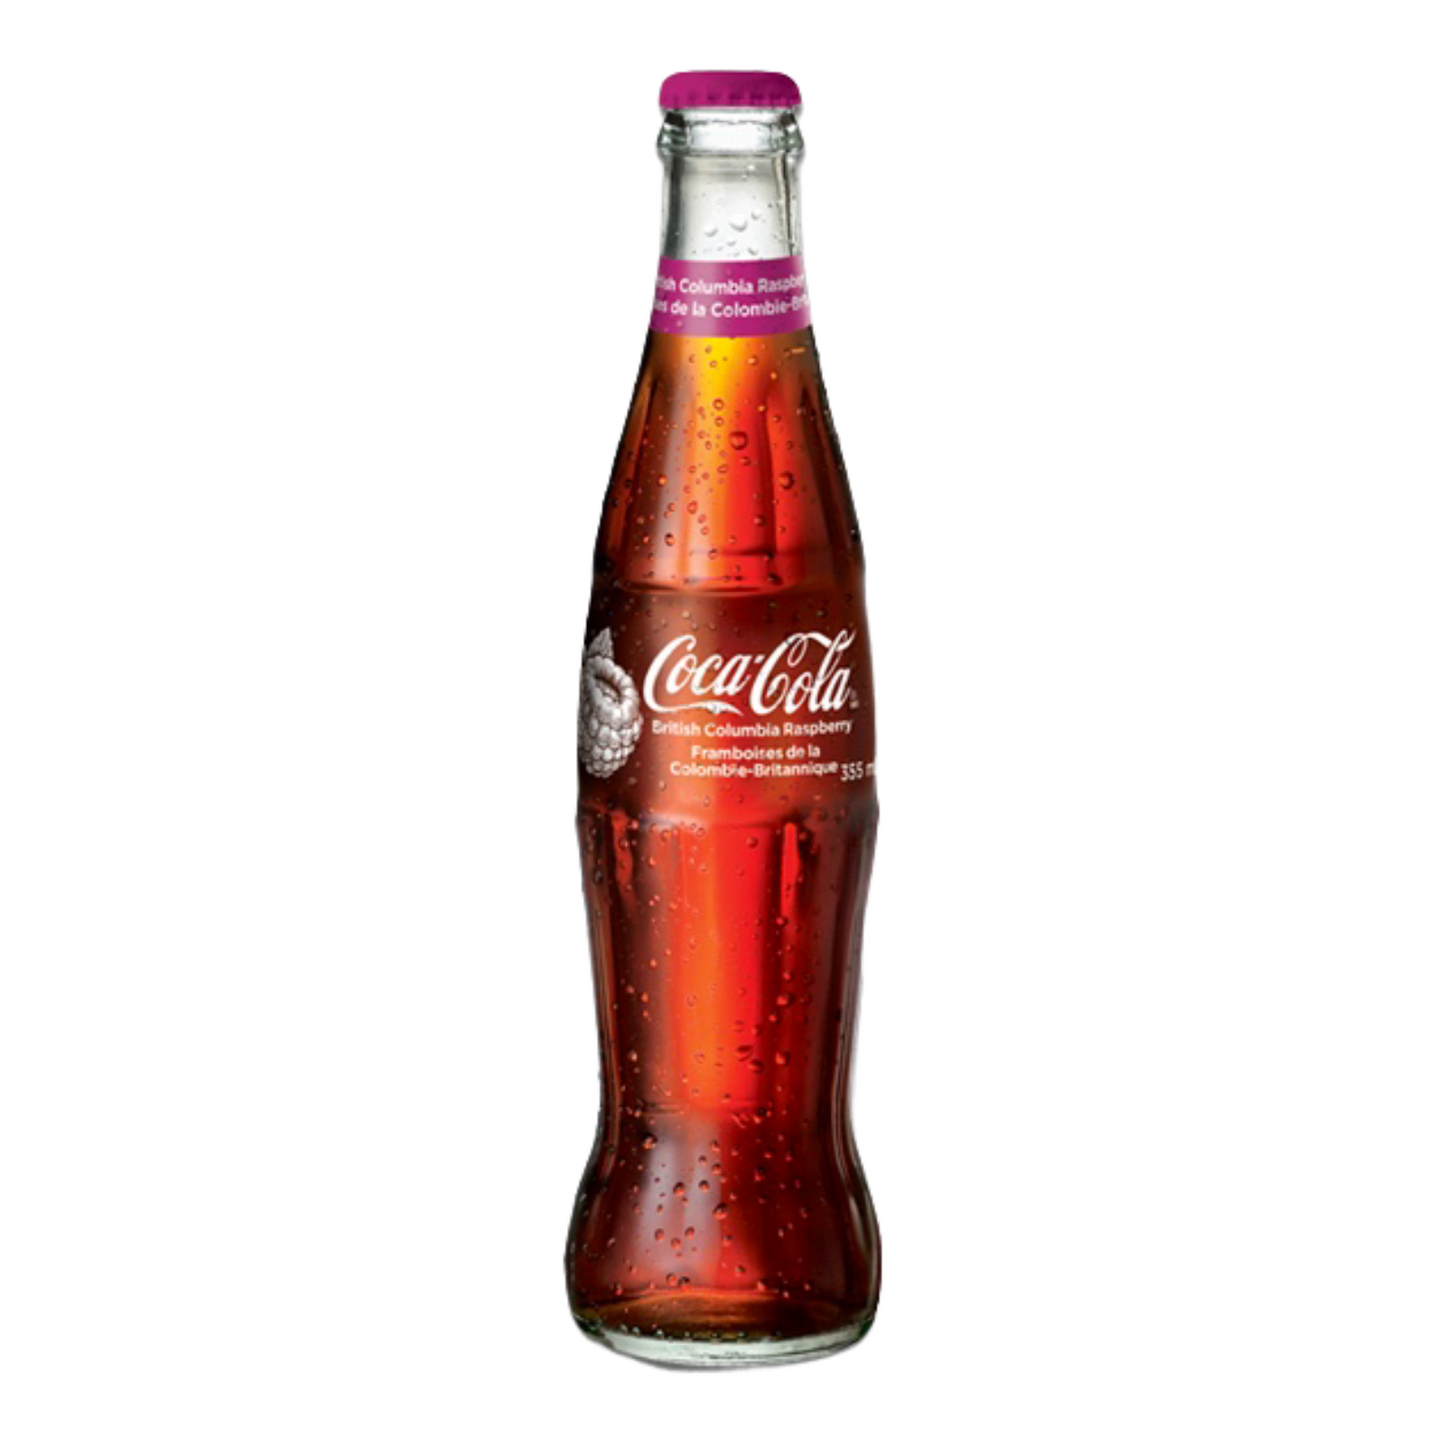 Coca-Cola British Columbia Raspberry 355ml